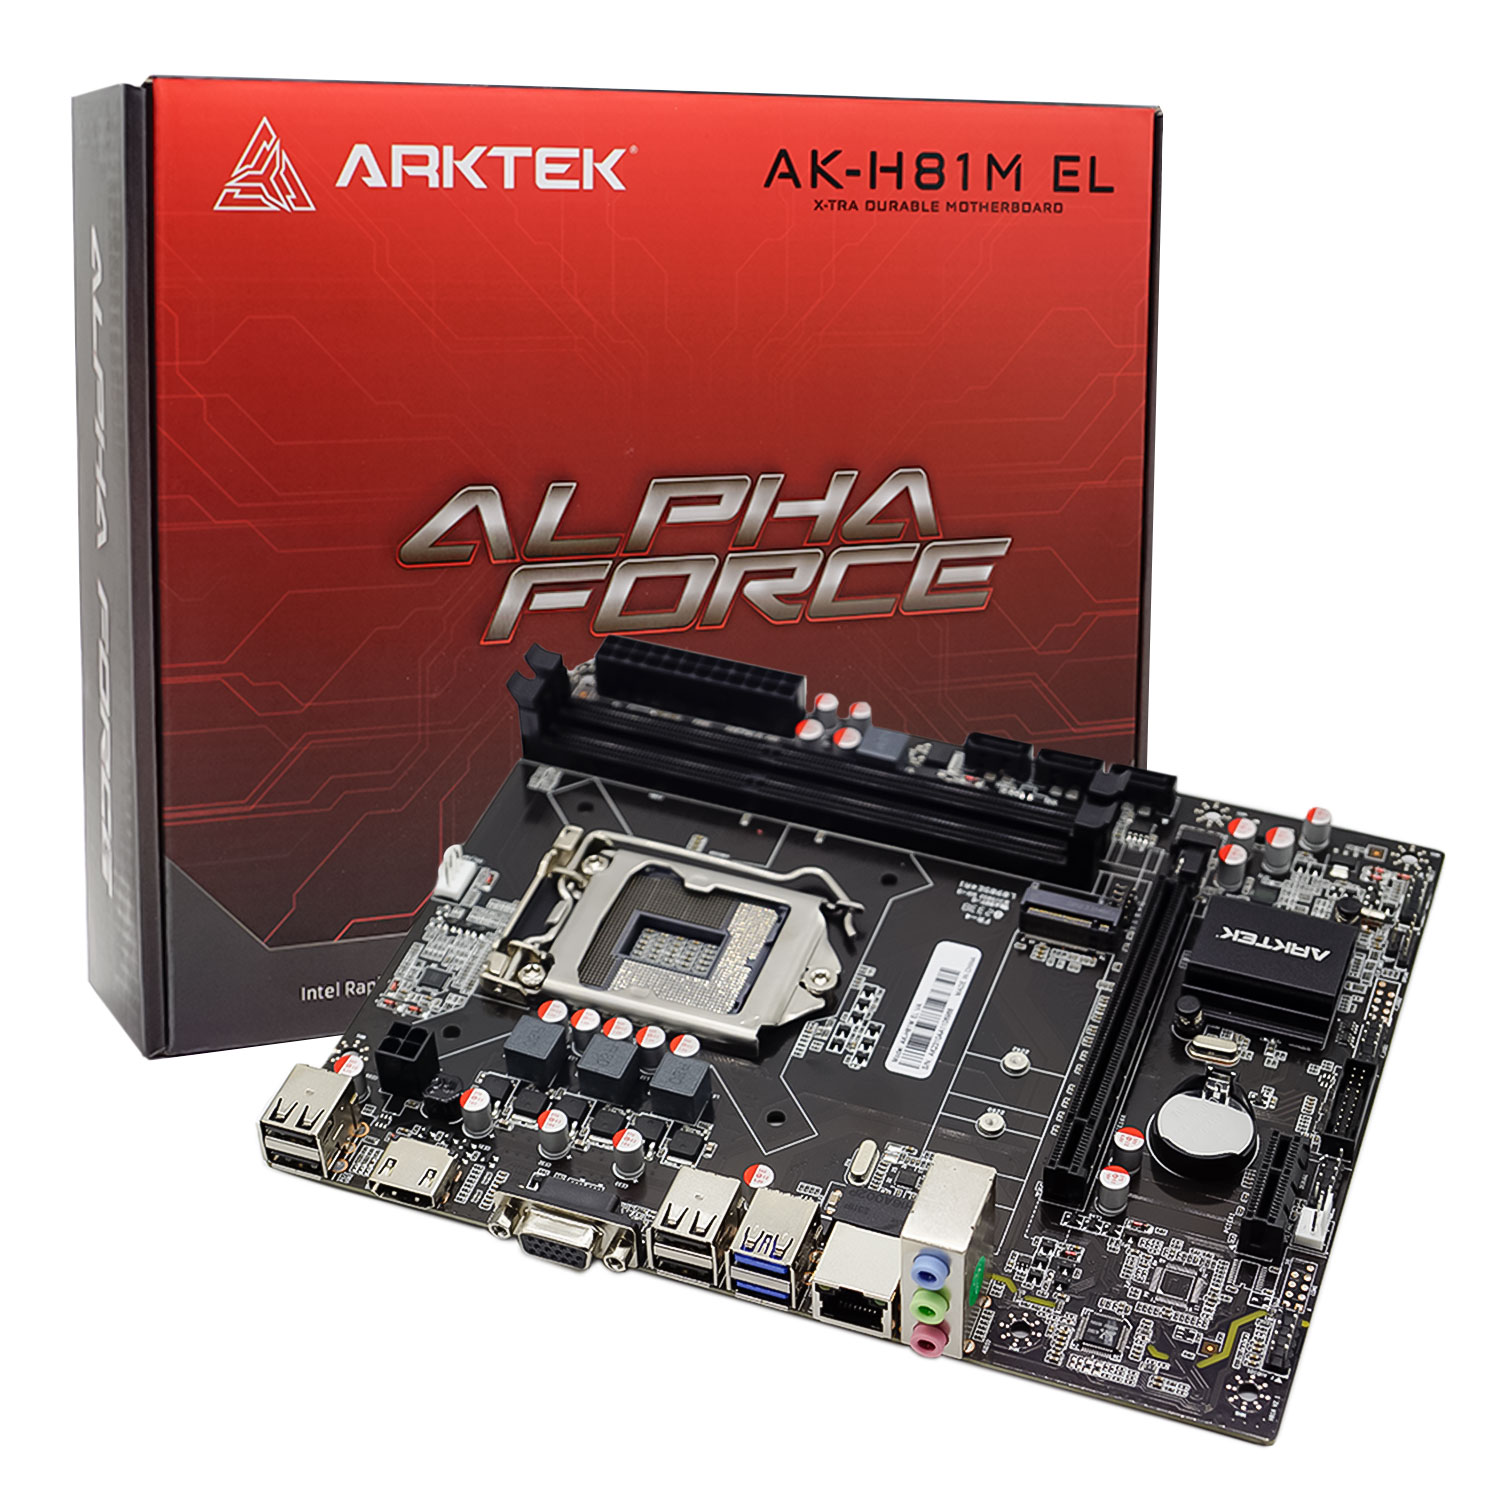 Placa Mãe Arktek AK-H81M EL DDR3 Socket LGA 1150 Chipset Intel H81 Micro ATX